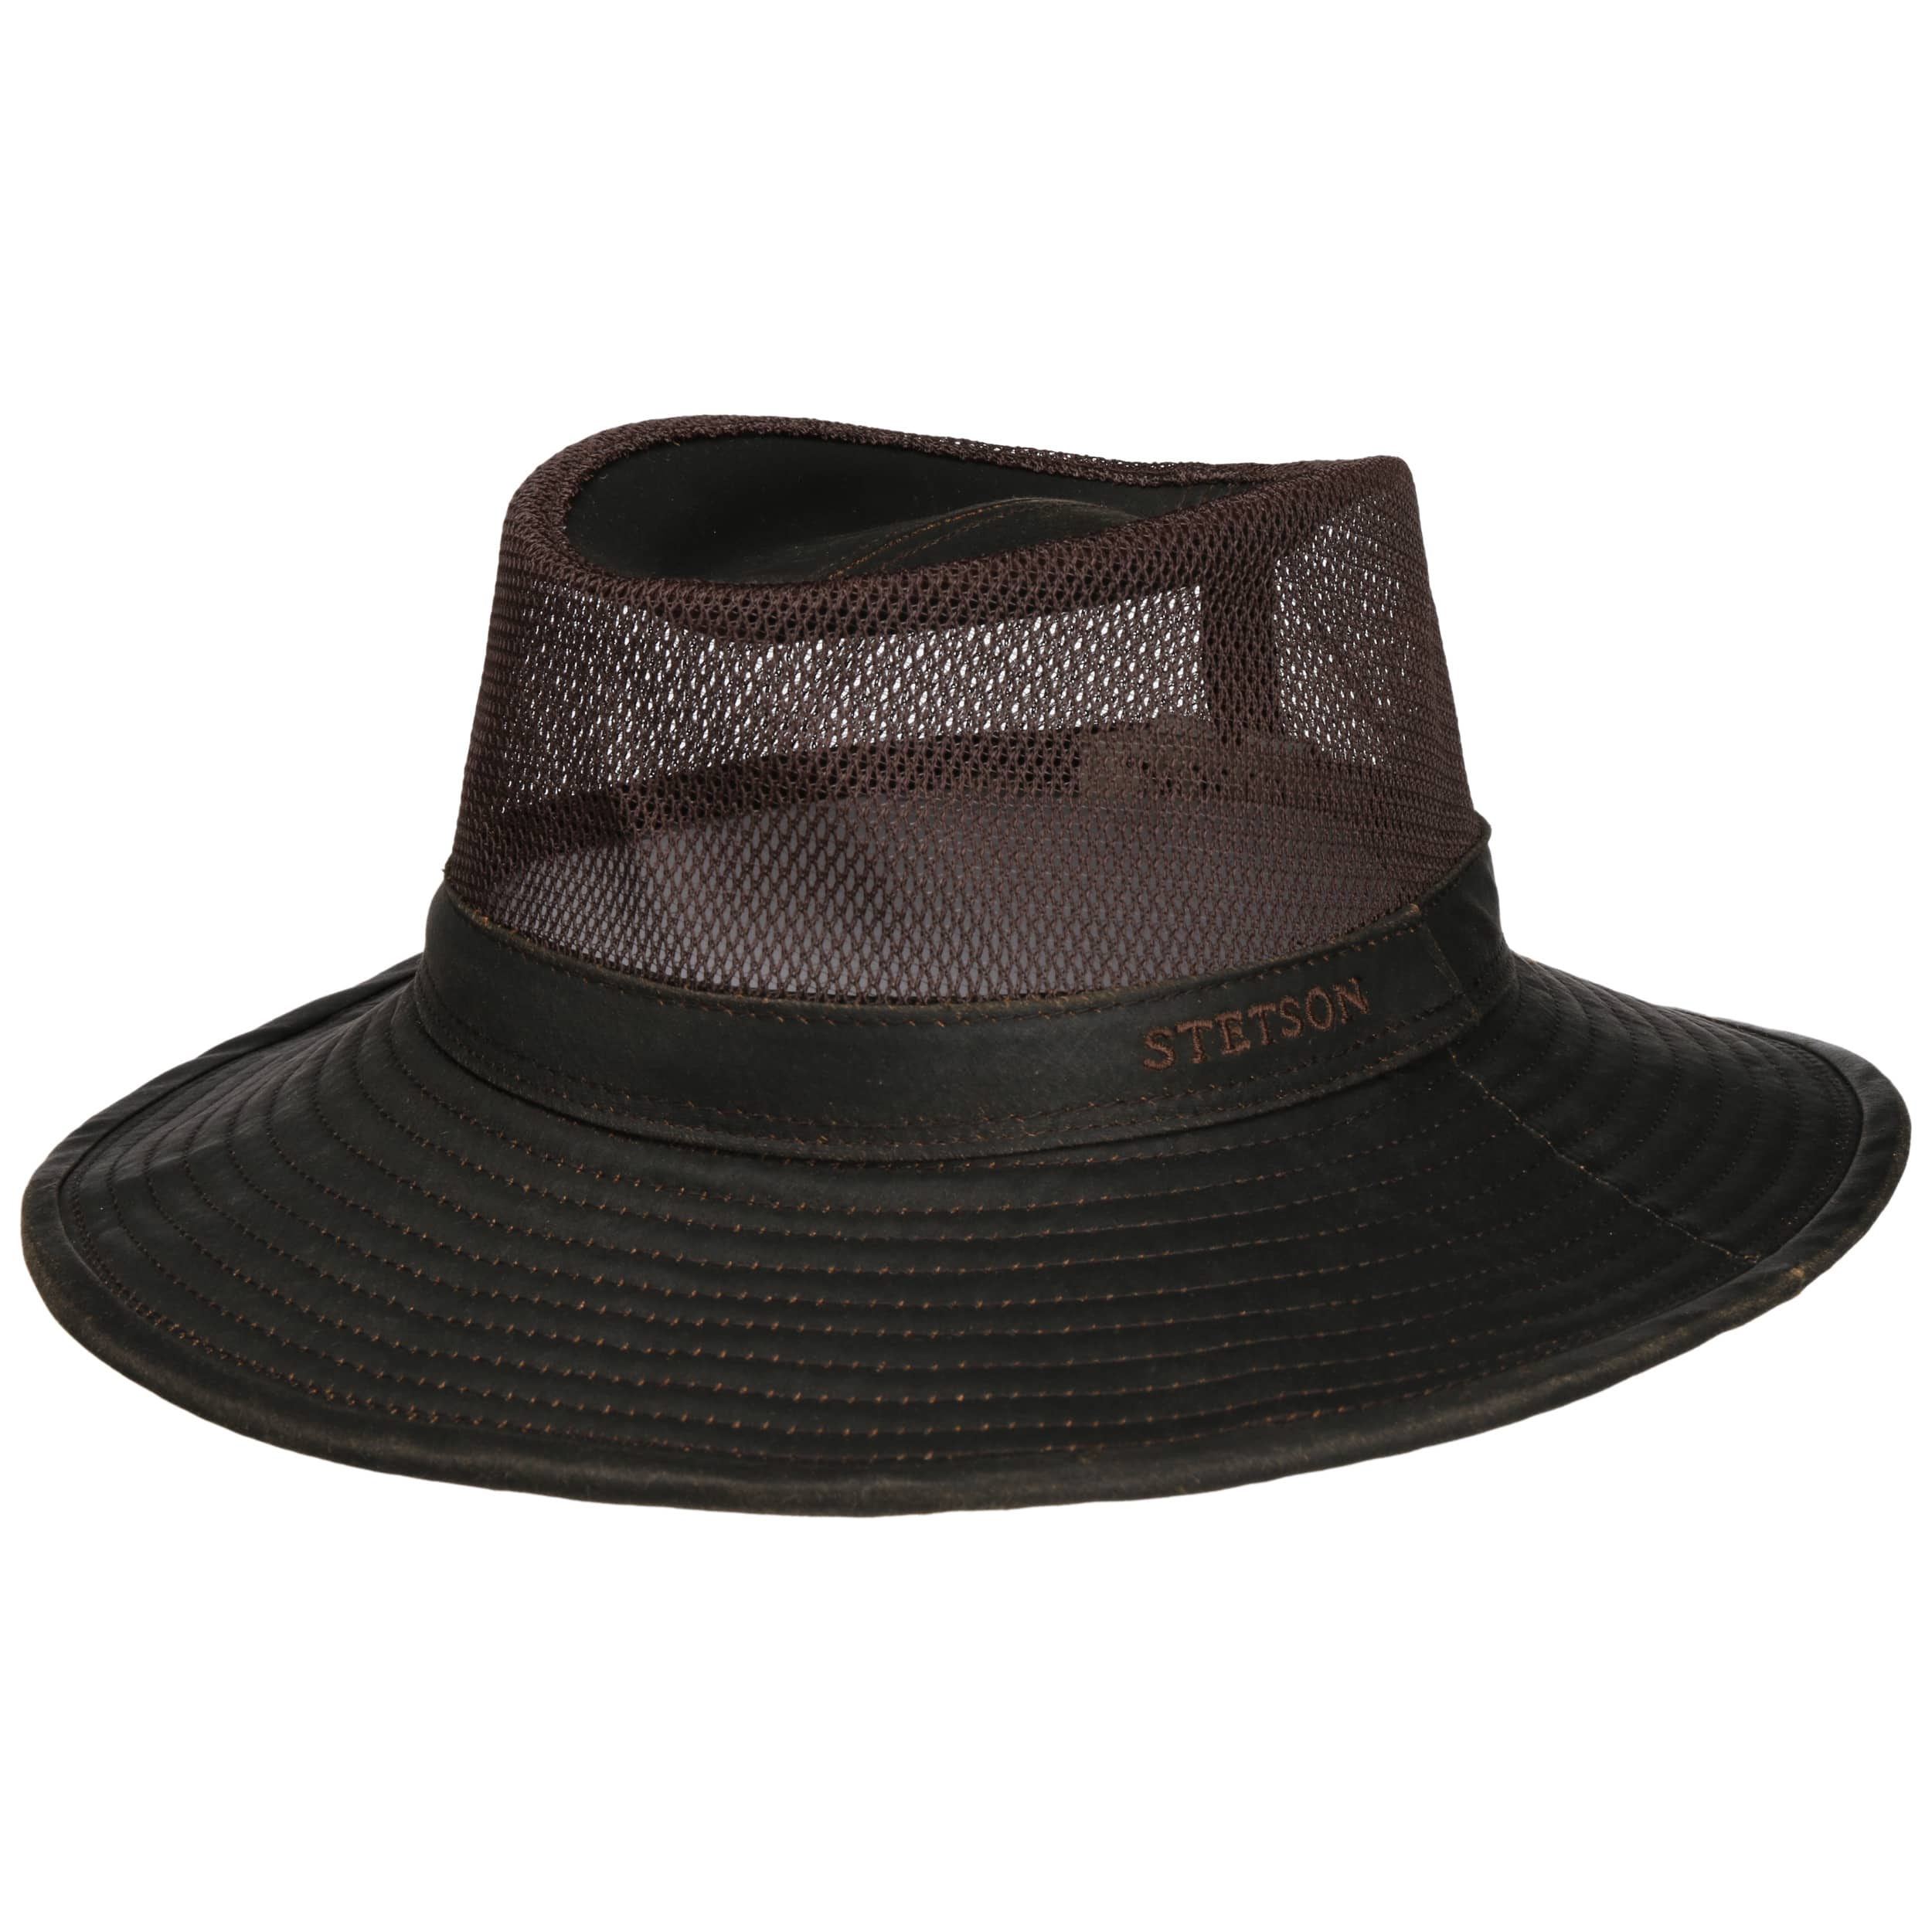 Stetson Vented Crown Cloth Hat Dark Brown L (58-59 cm)